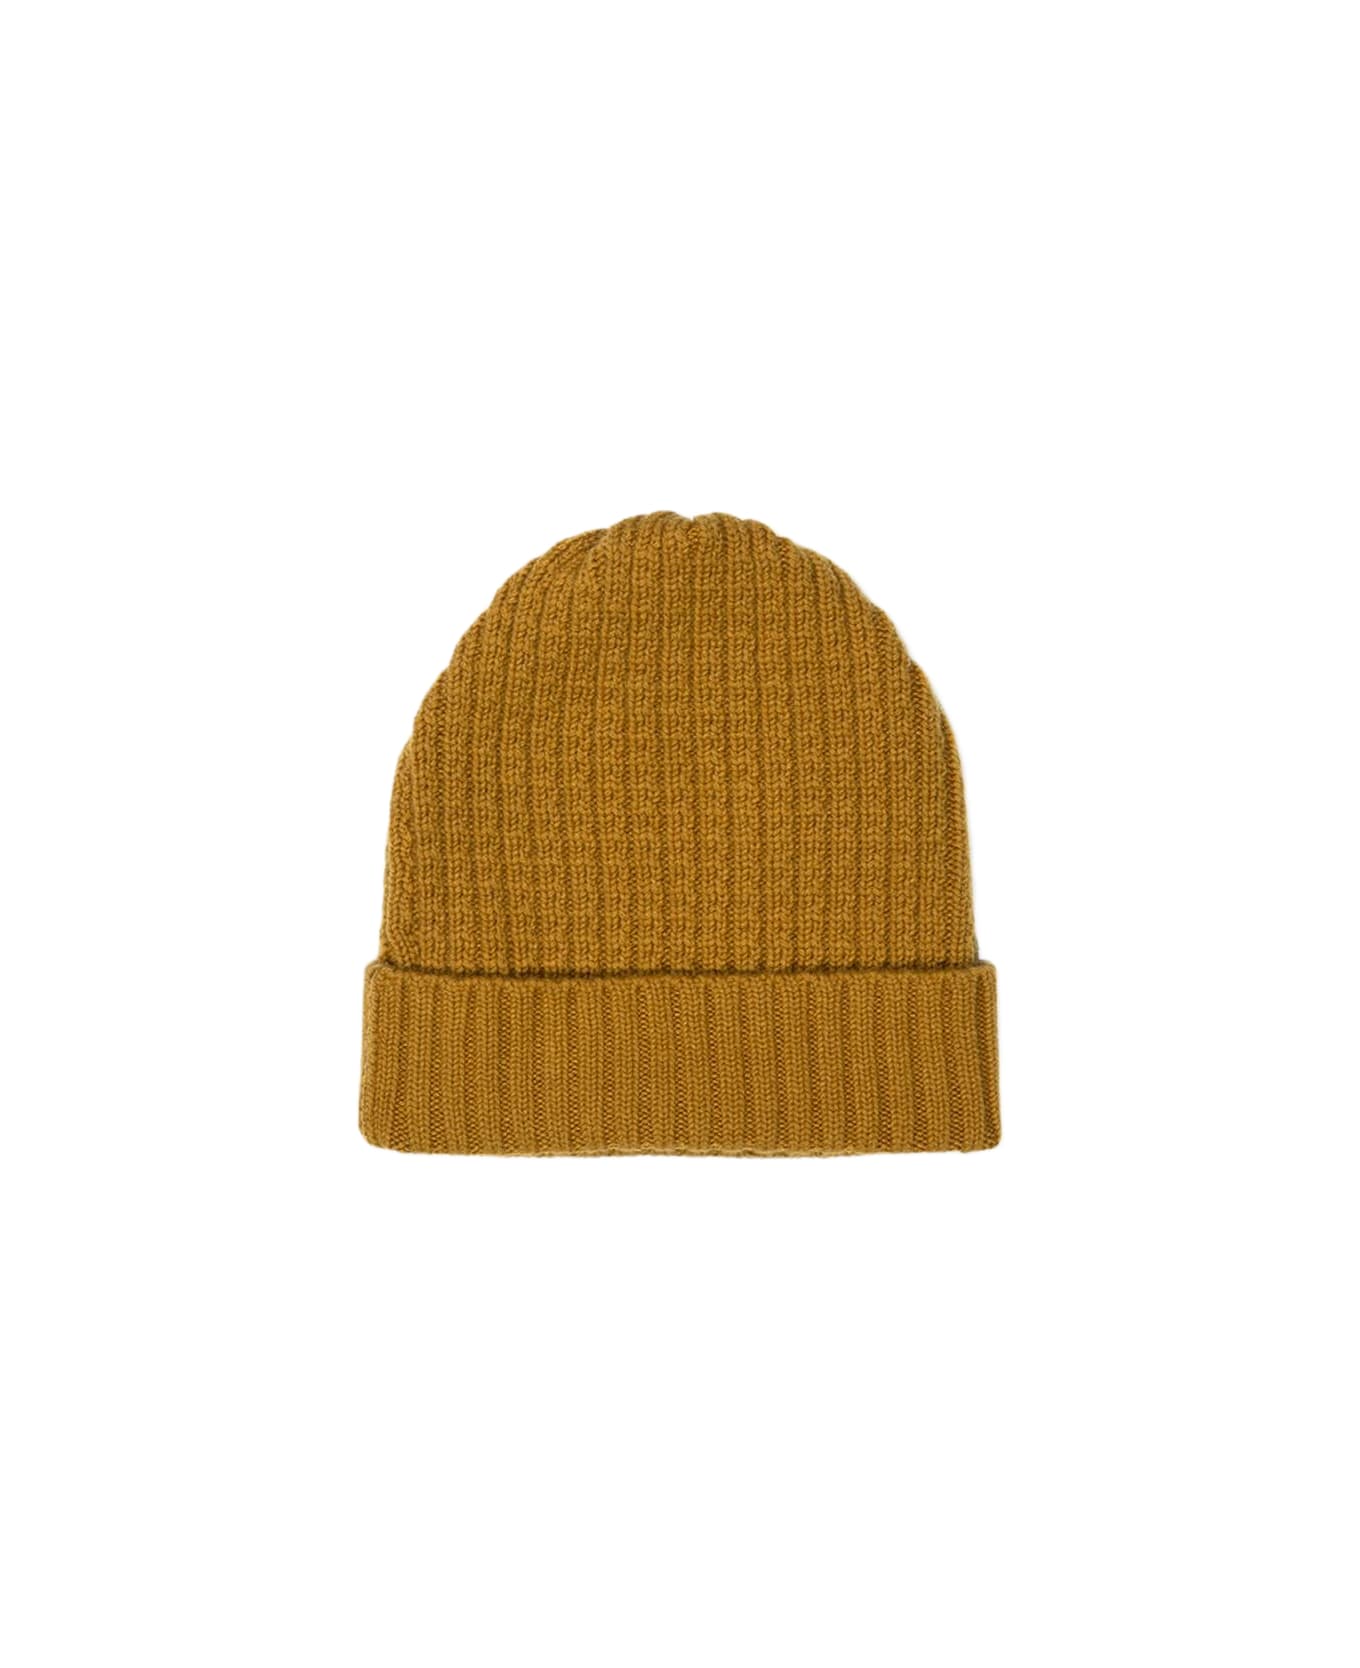 Larusmiani Cap Hat - Goldenrod